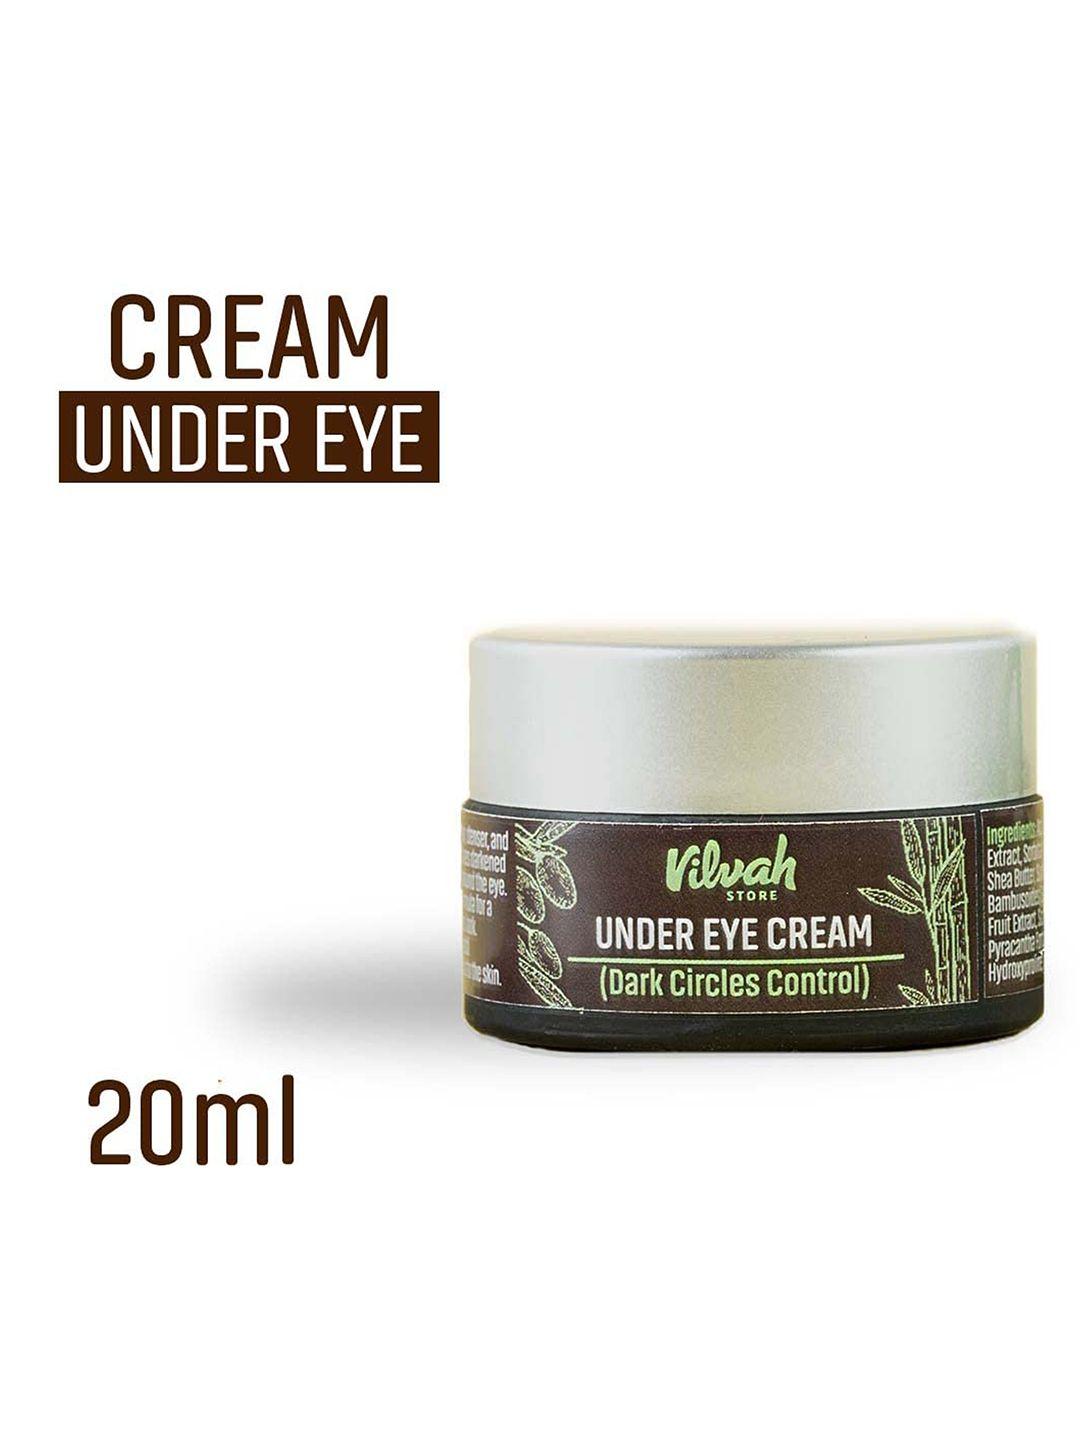 vilvah store under eye cream for dark circles - 20 ml